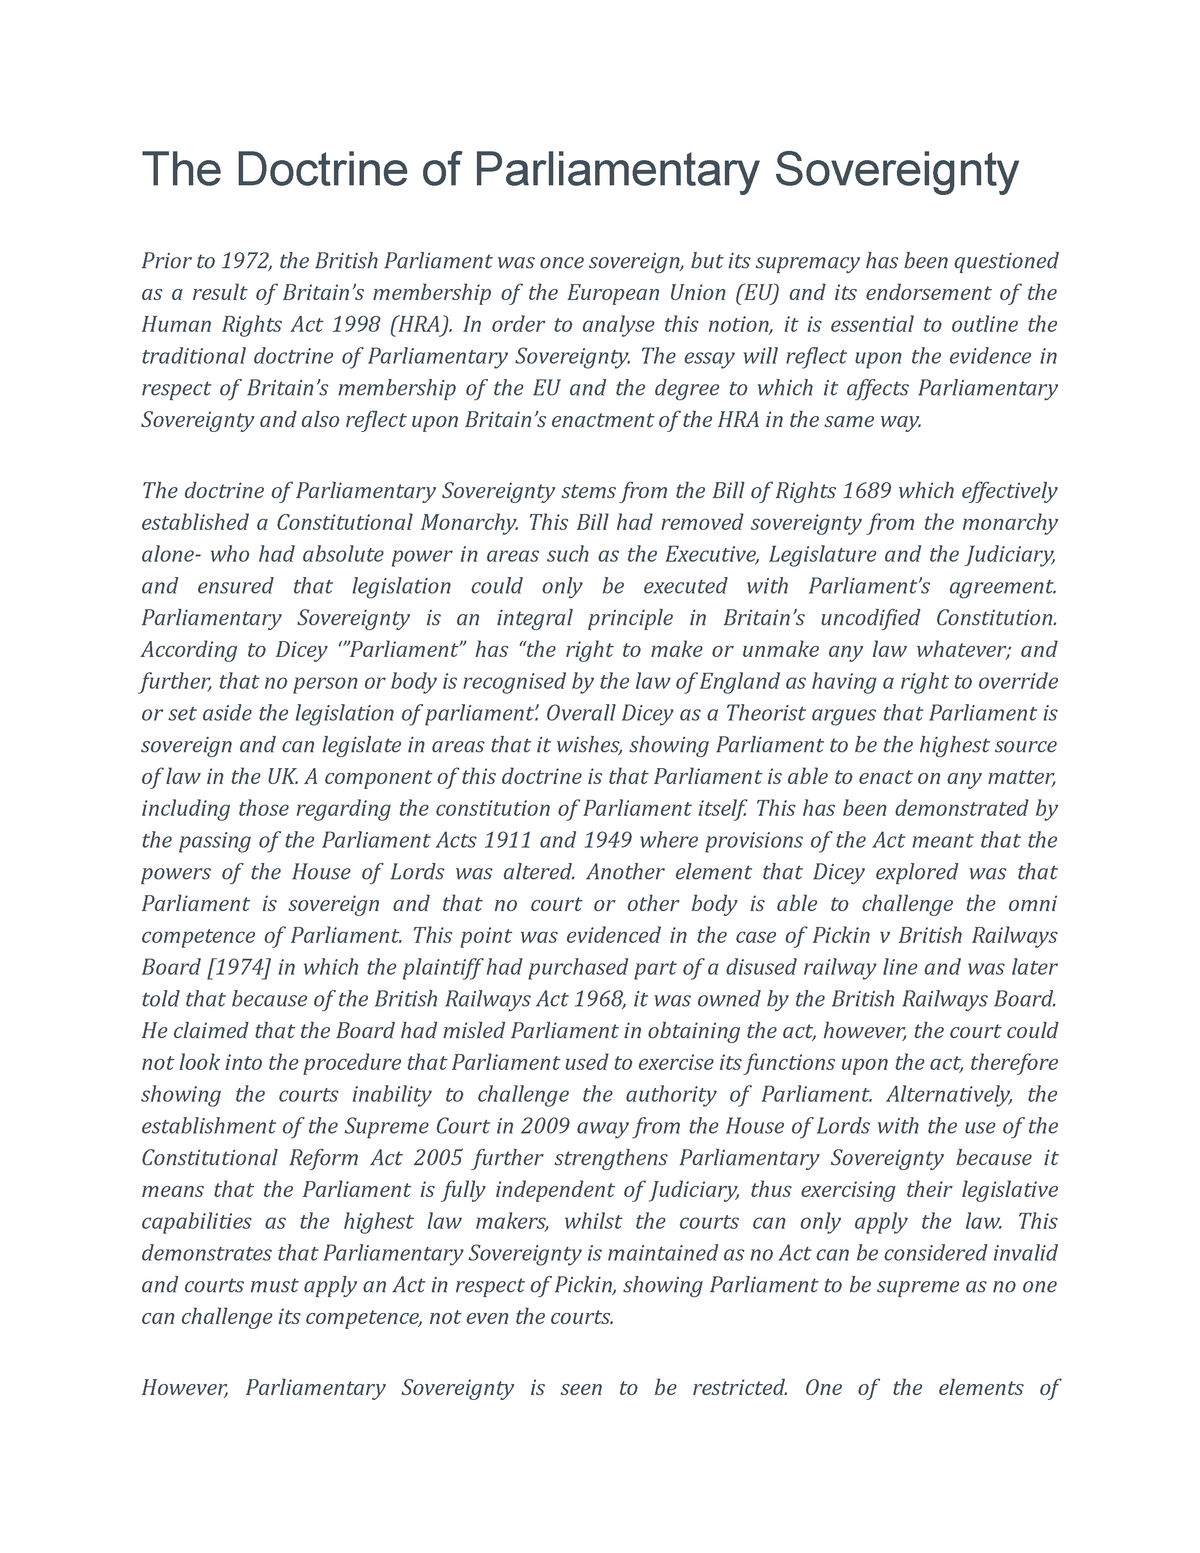 essay on parliamentary sovereignty